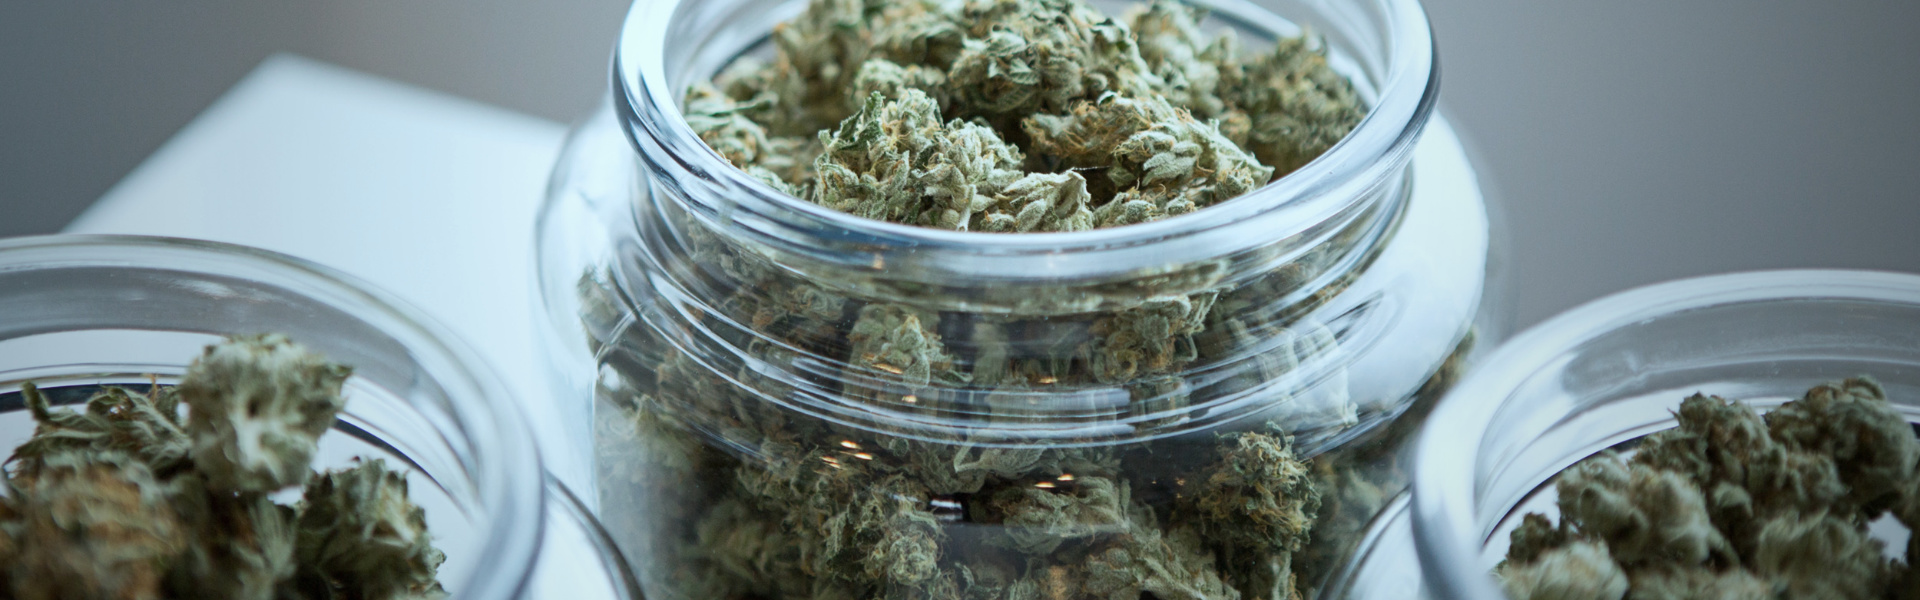 Medical marijuana in glass jar